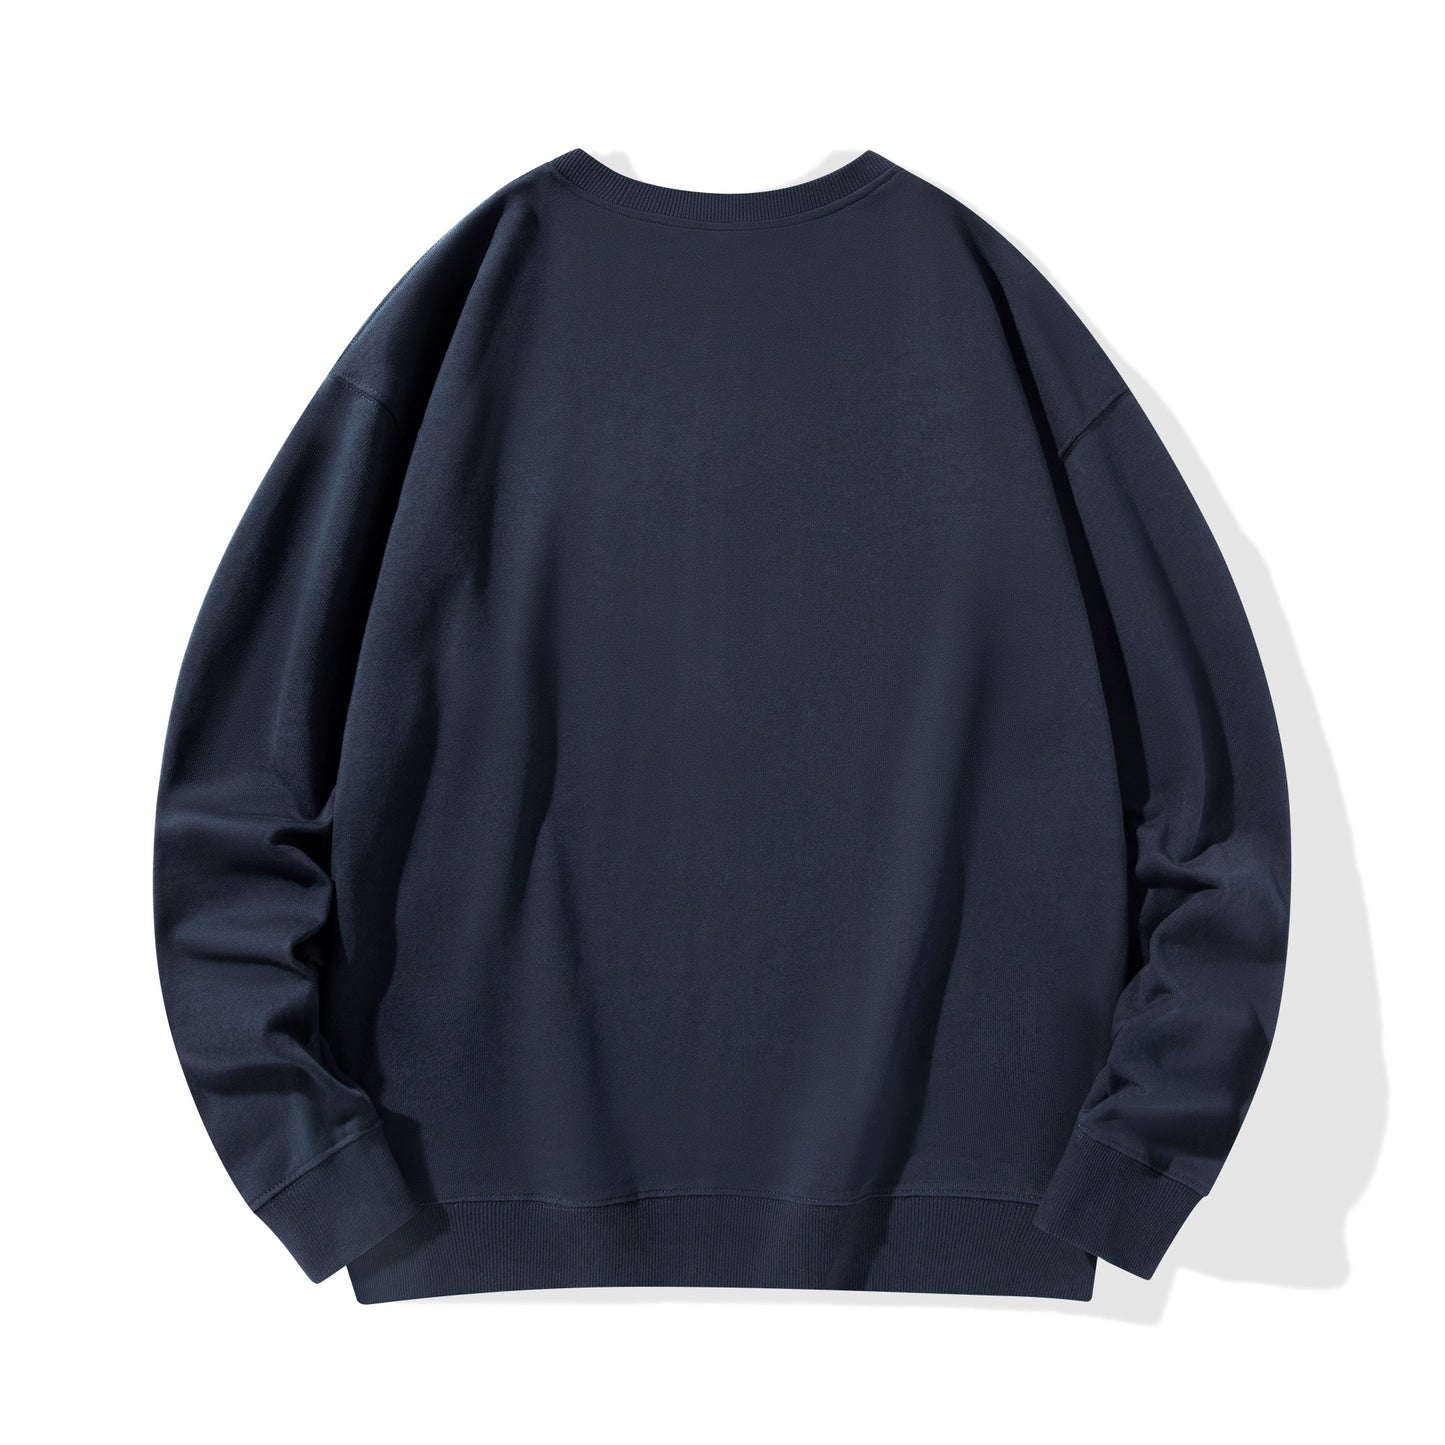 FIGARO Adult Cotton Sweatershirt